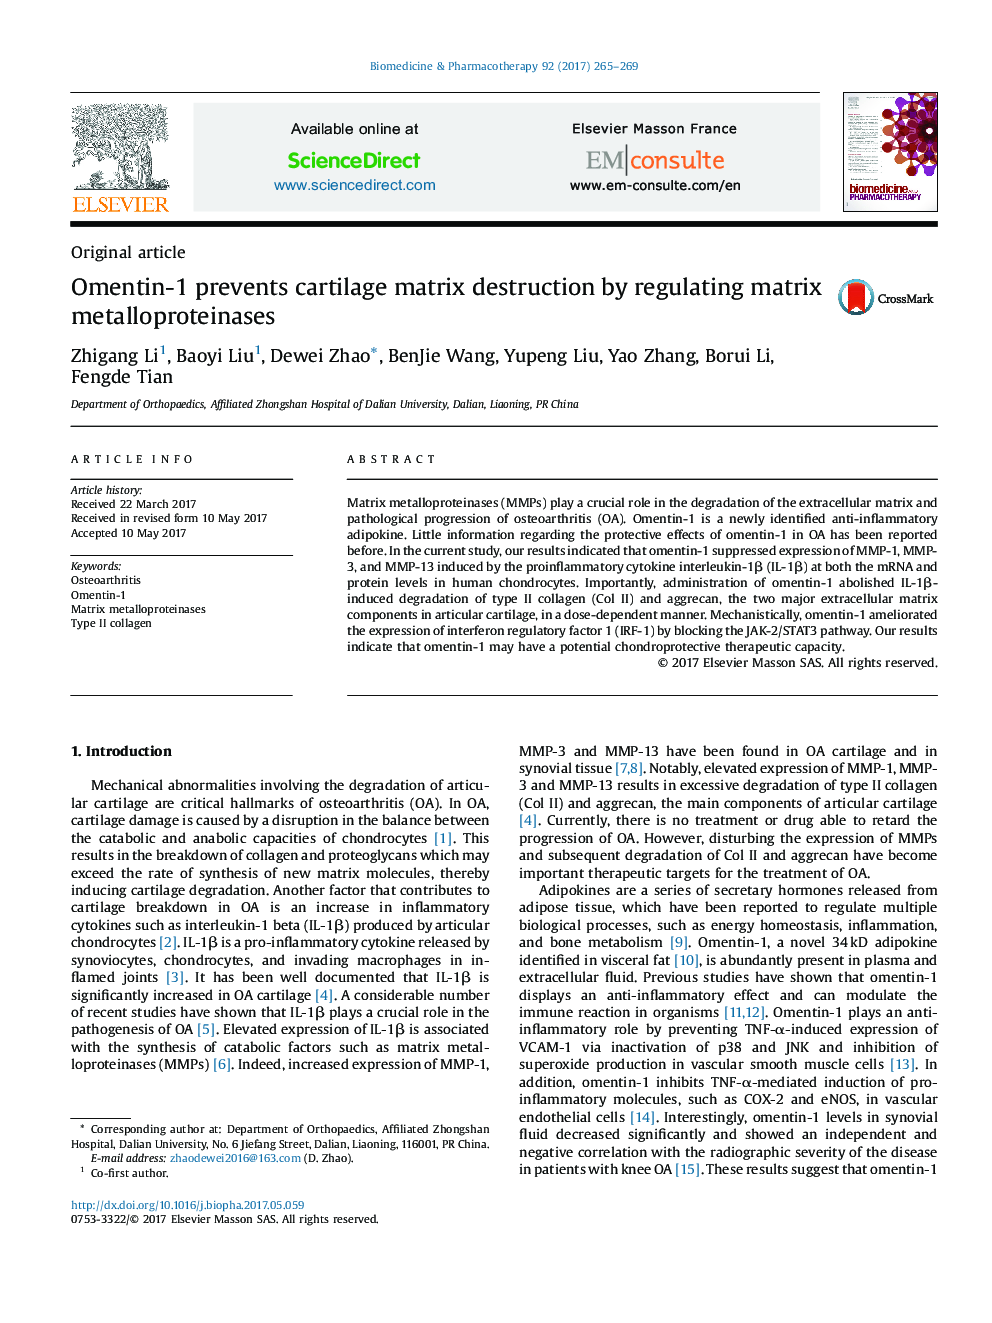 Omentin-1 prevents cartilage matrix destruction by regulating matrix metalloproteinases